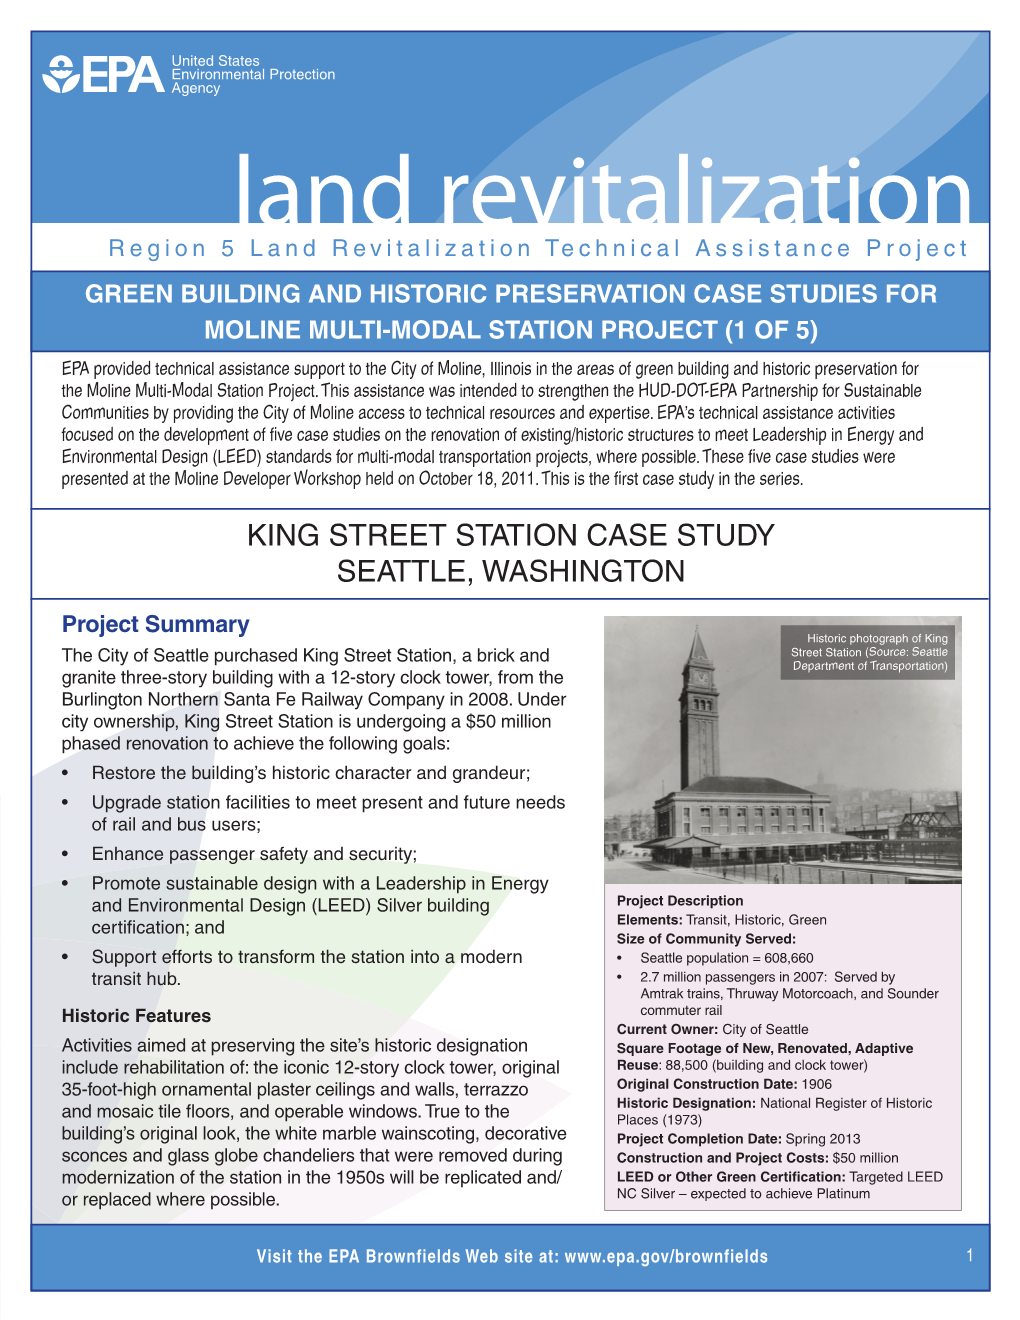 Final King Street Station Case Study (Seattle